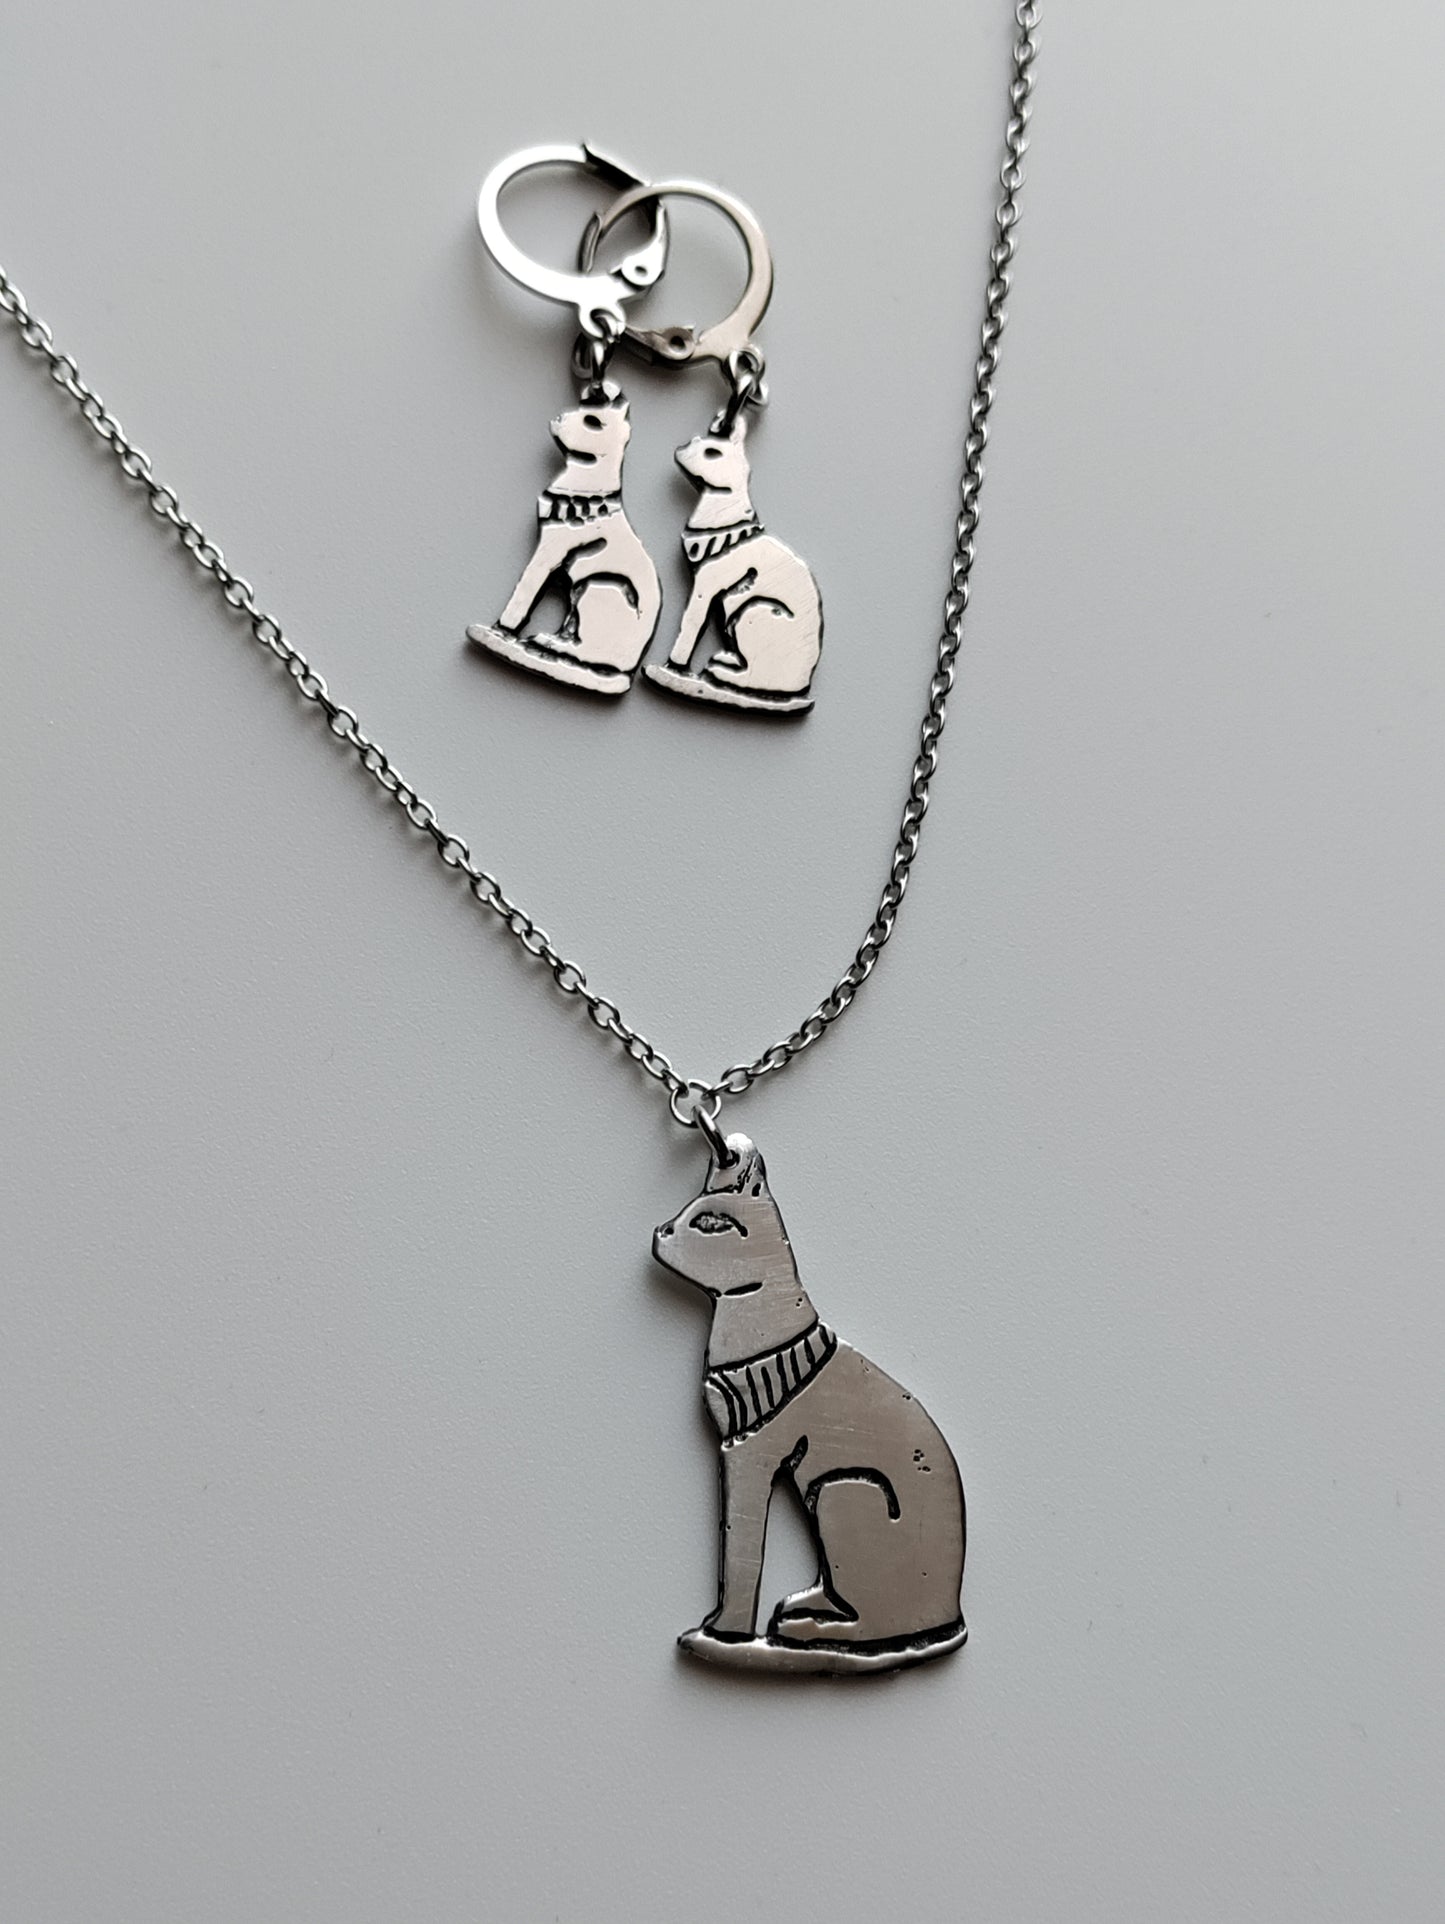 Bastet Egyptian cat goddess necklace and earrings set LEIA&CO